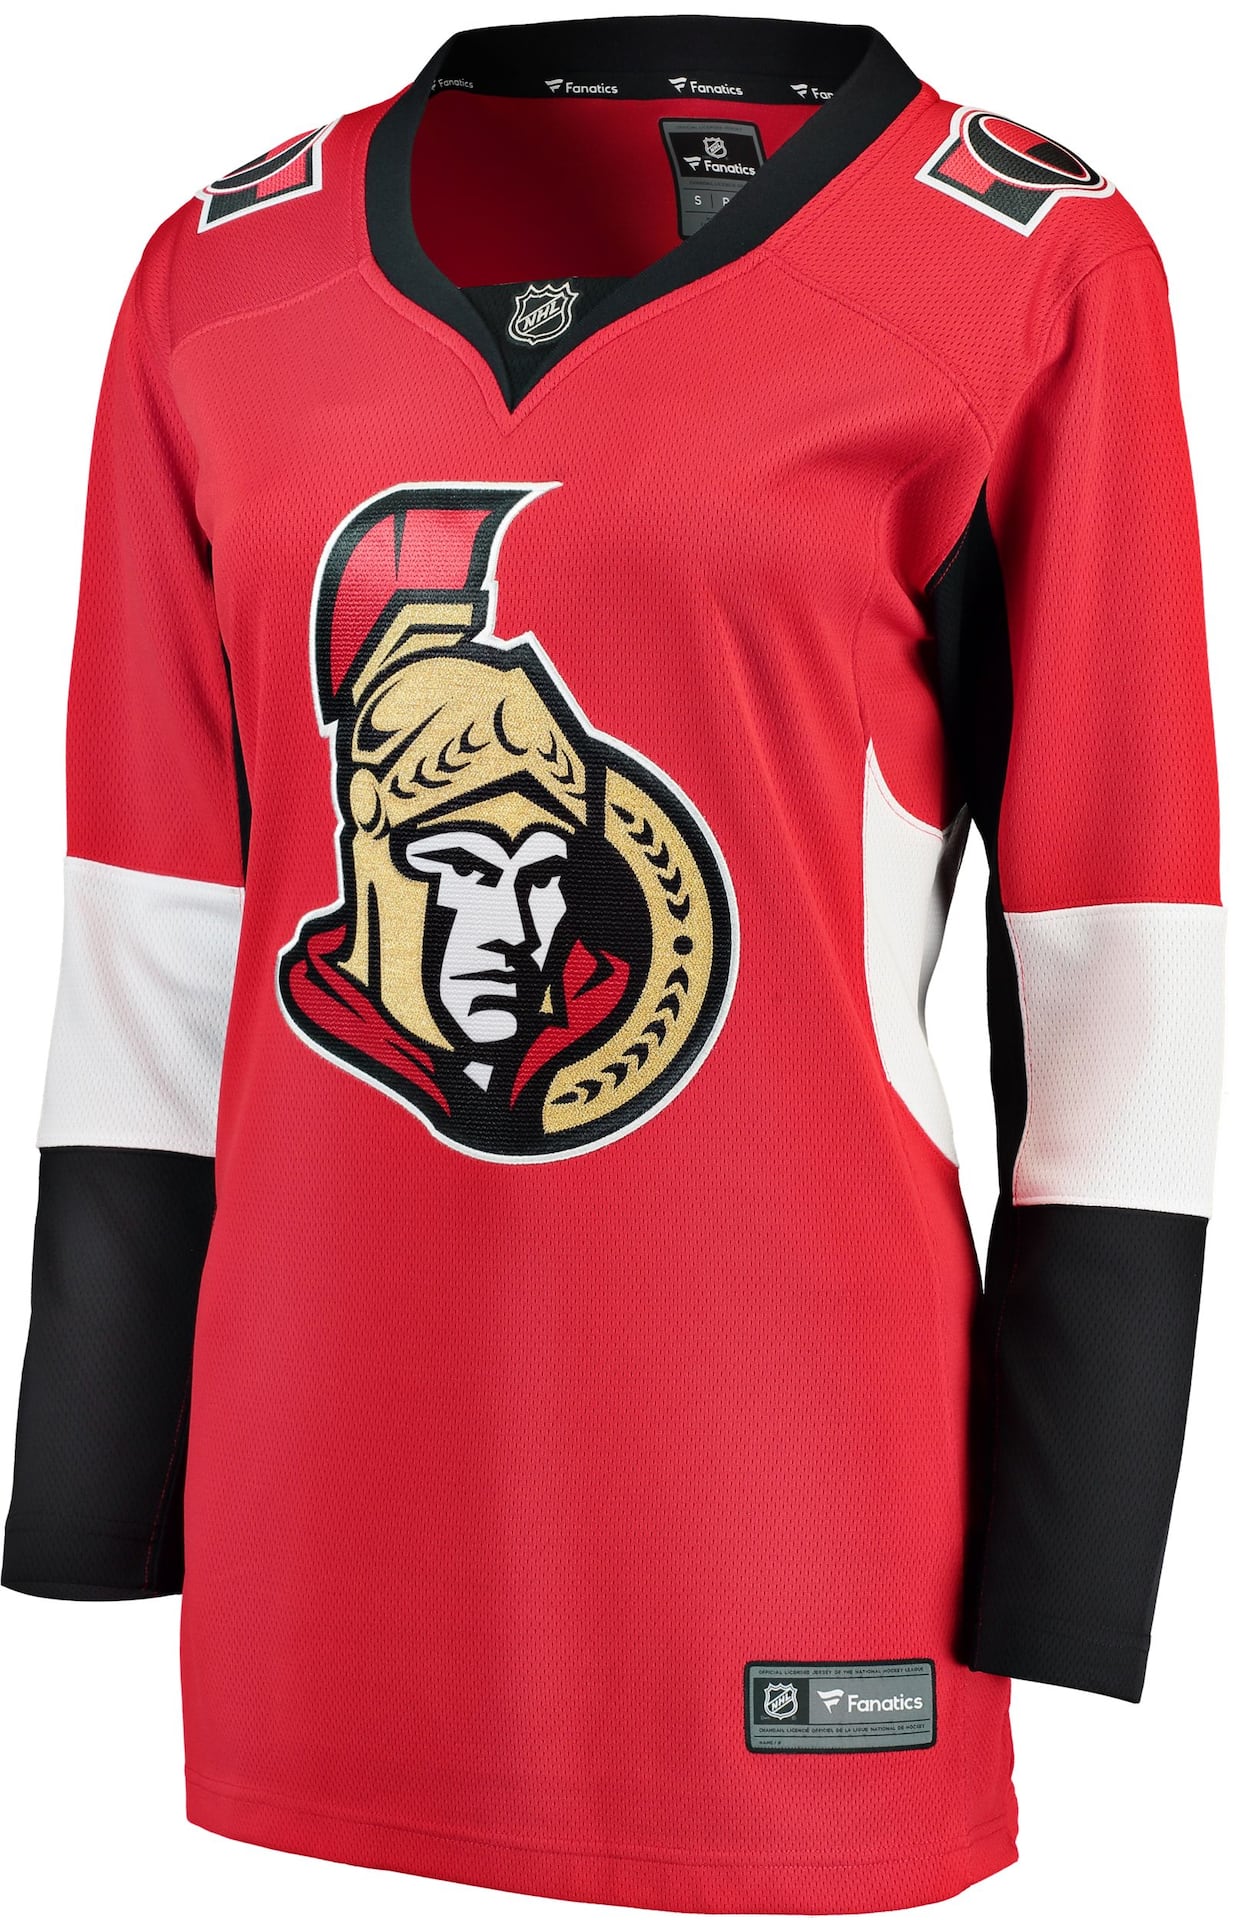 Ottawa Senators Jerseys For Sale Online